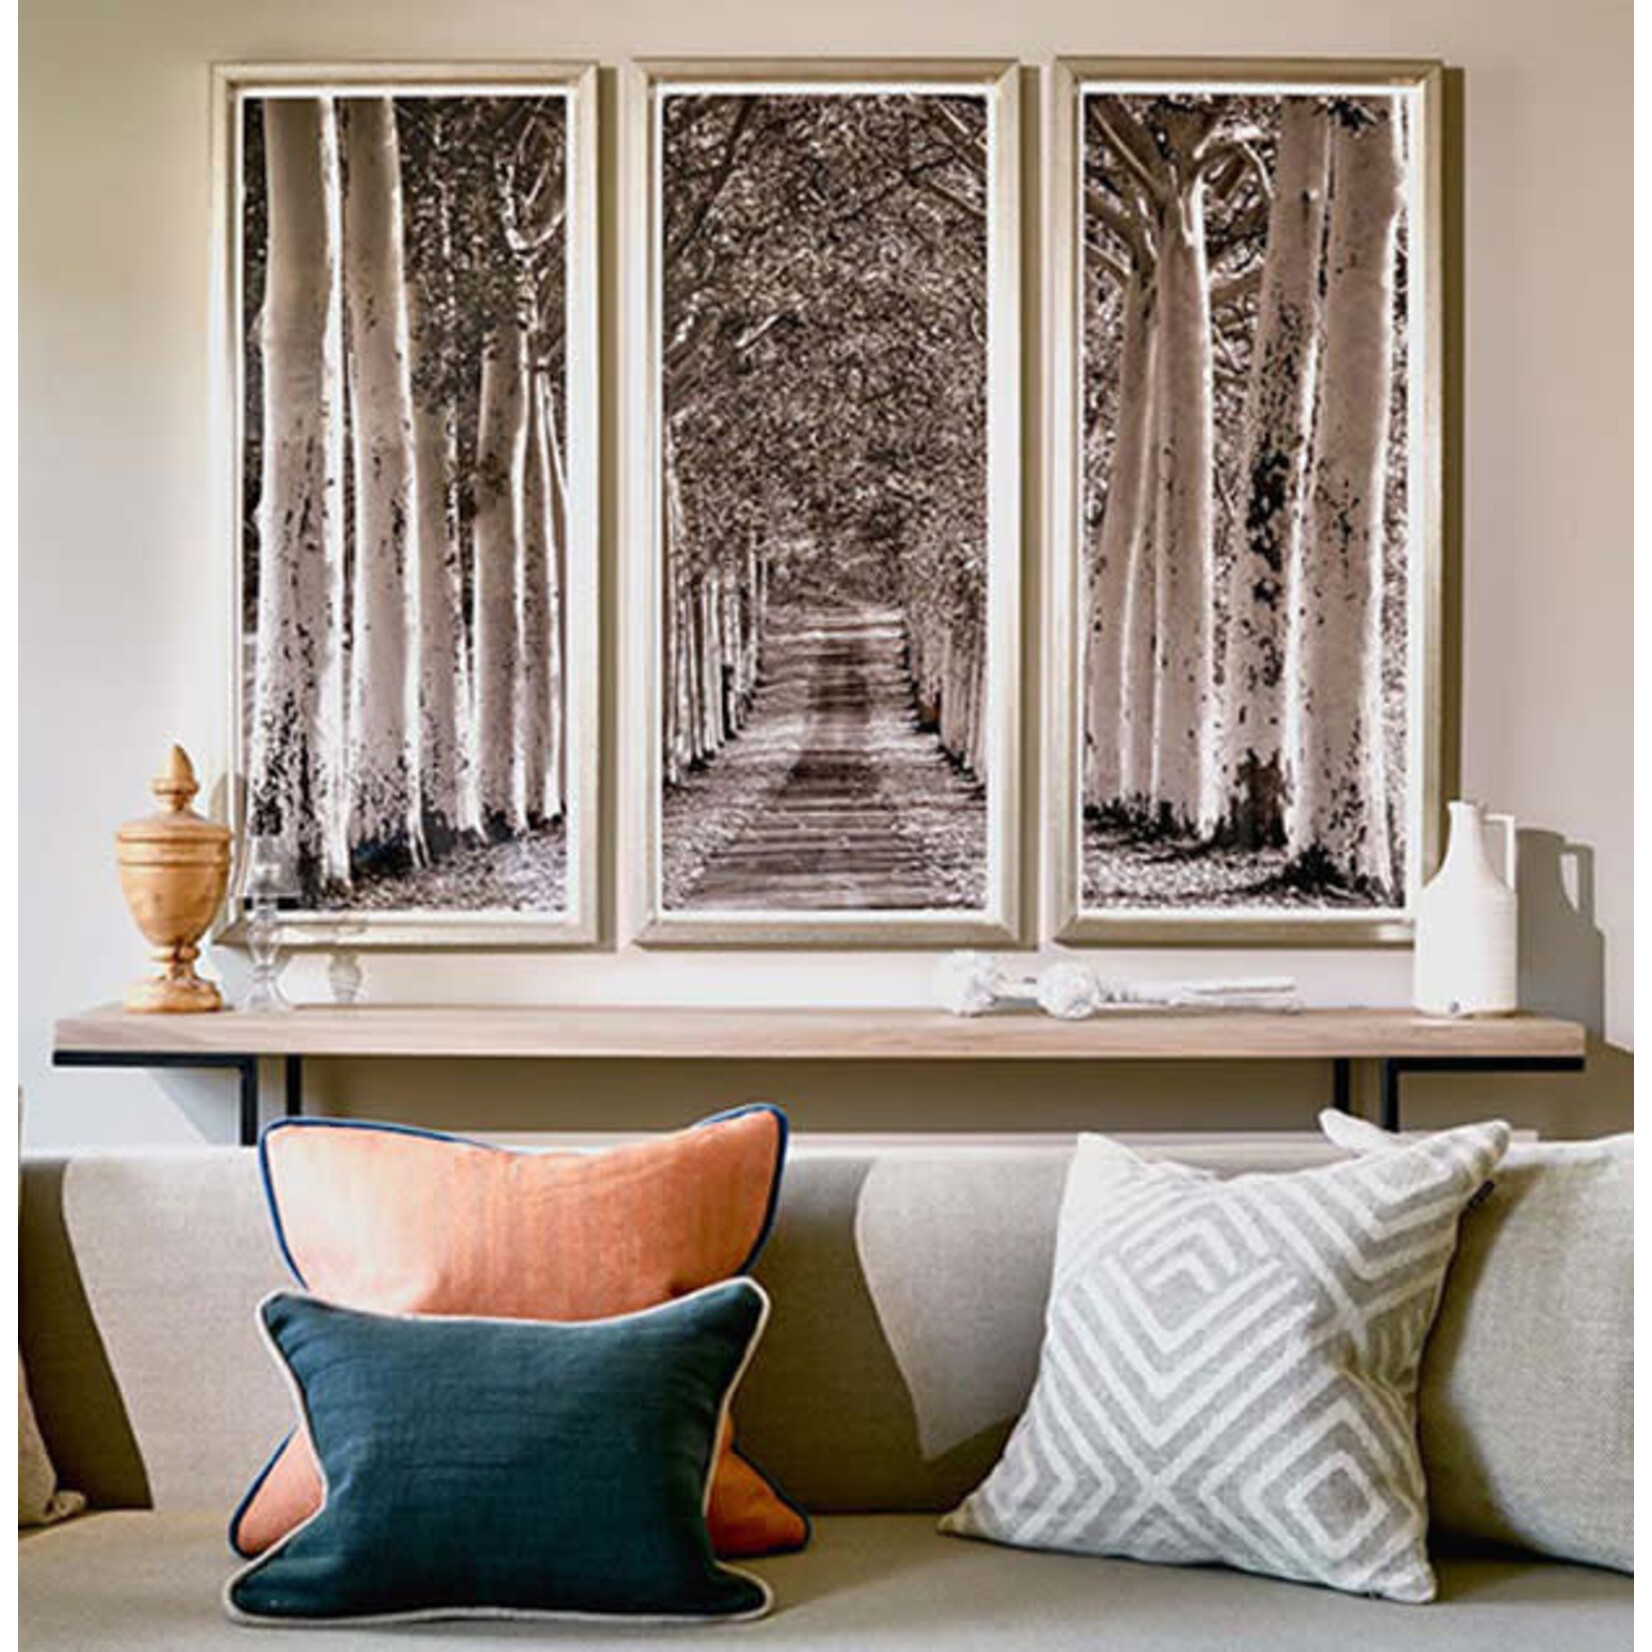 Trowbridge Gallery Avenue of Trees Triptych Artwork